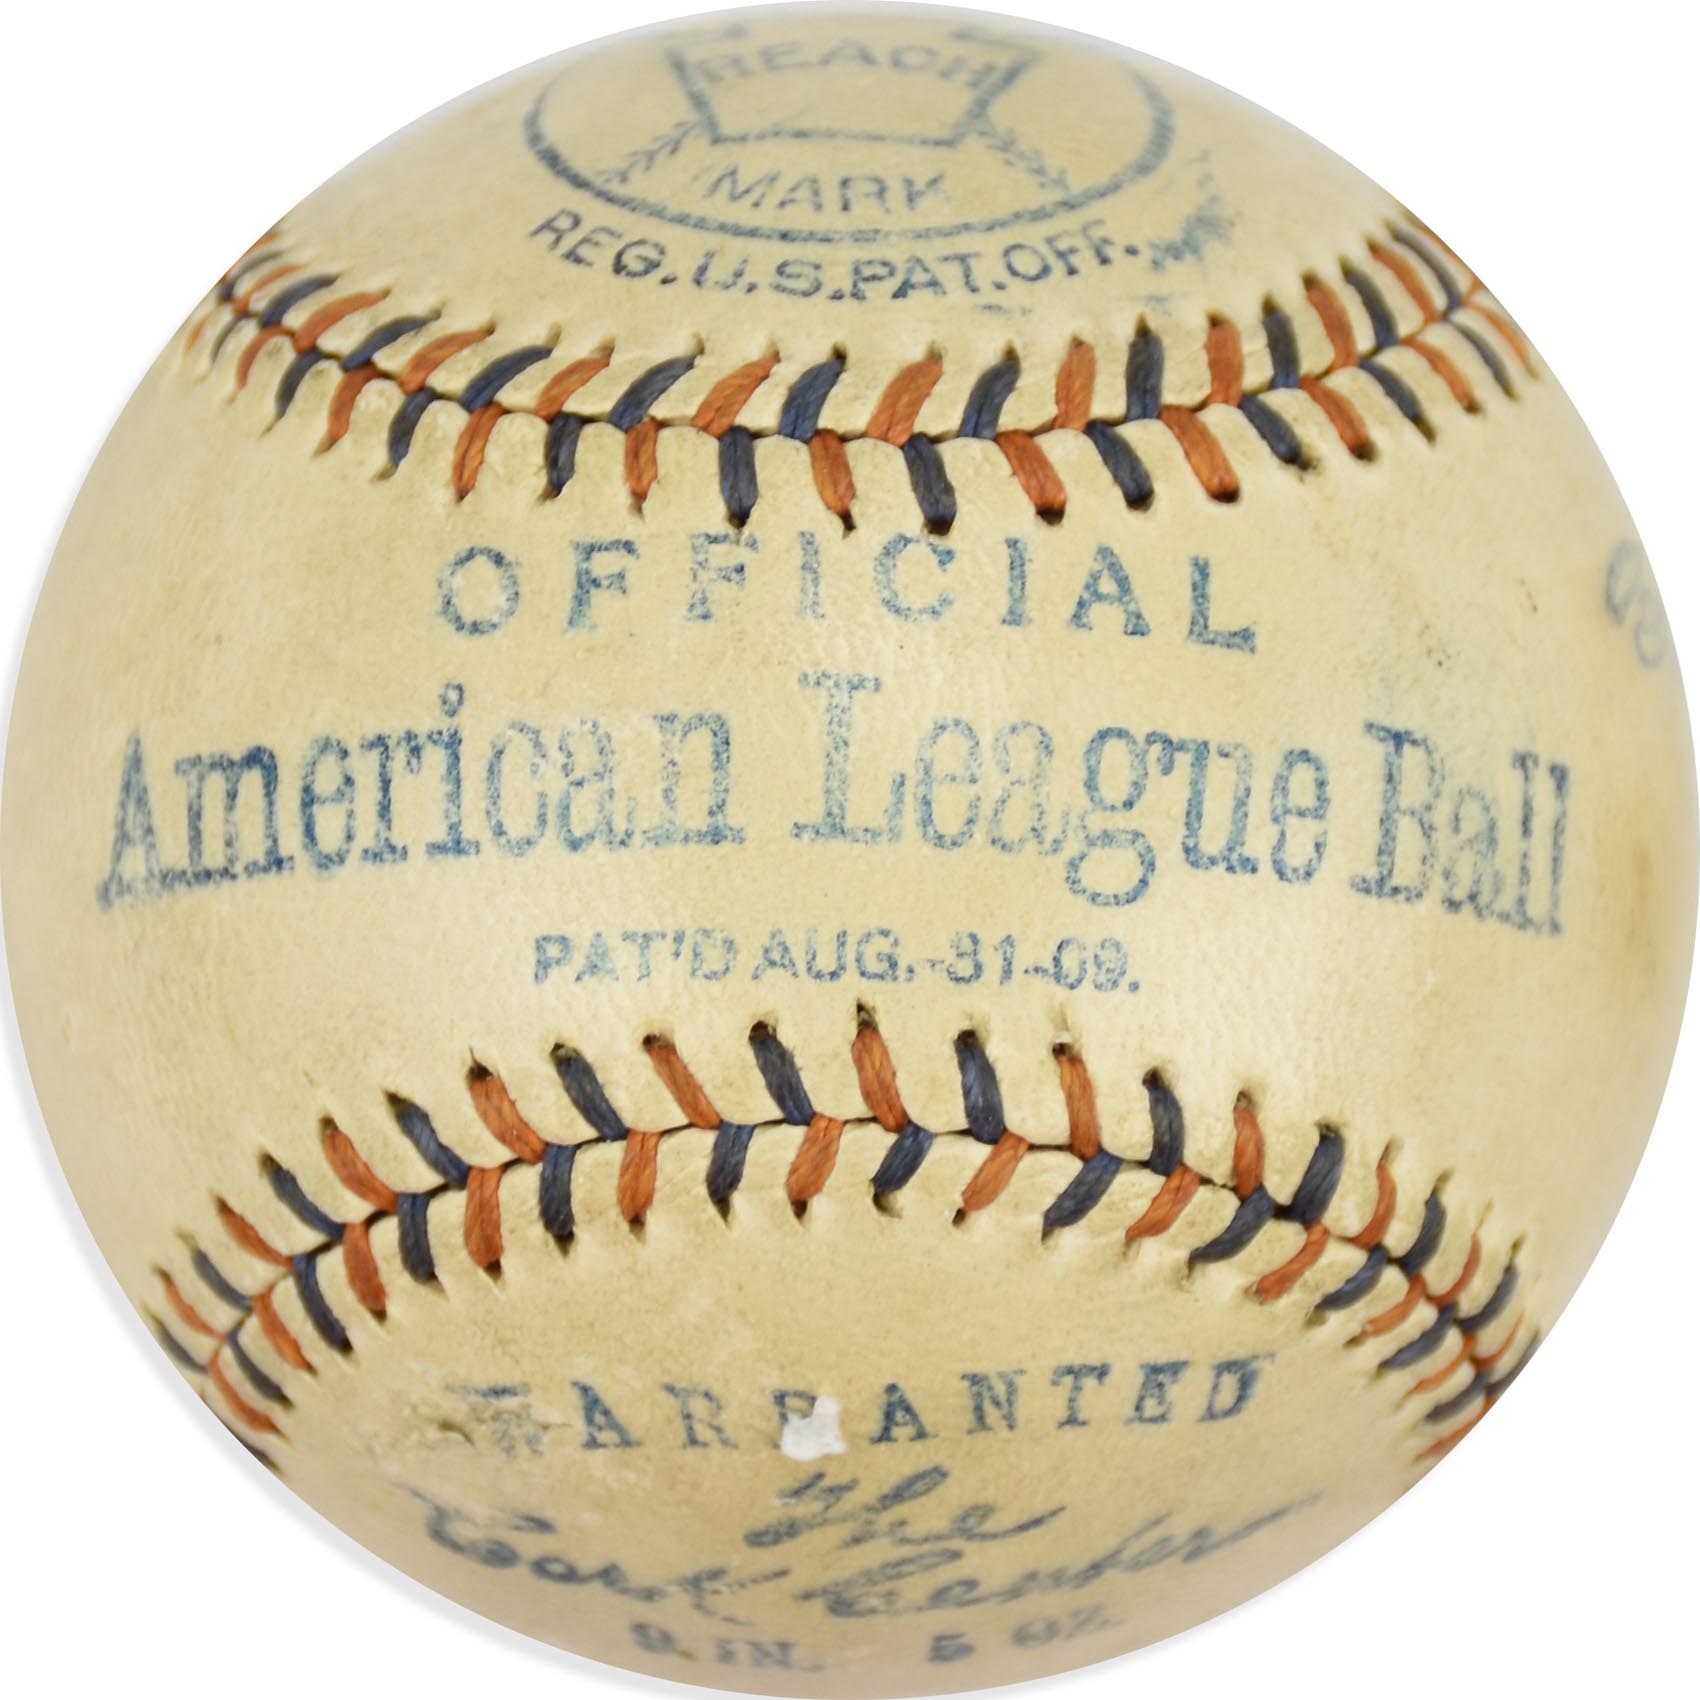 - 1909 Patent Ban Johnson Official American League Baseball